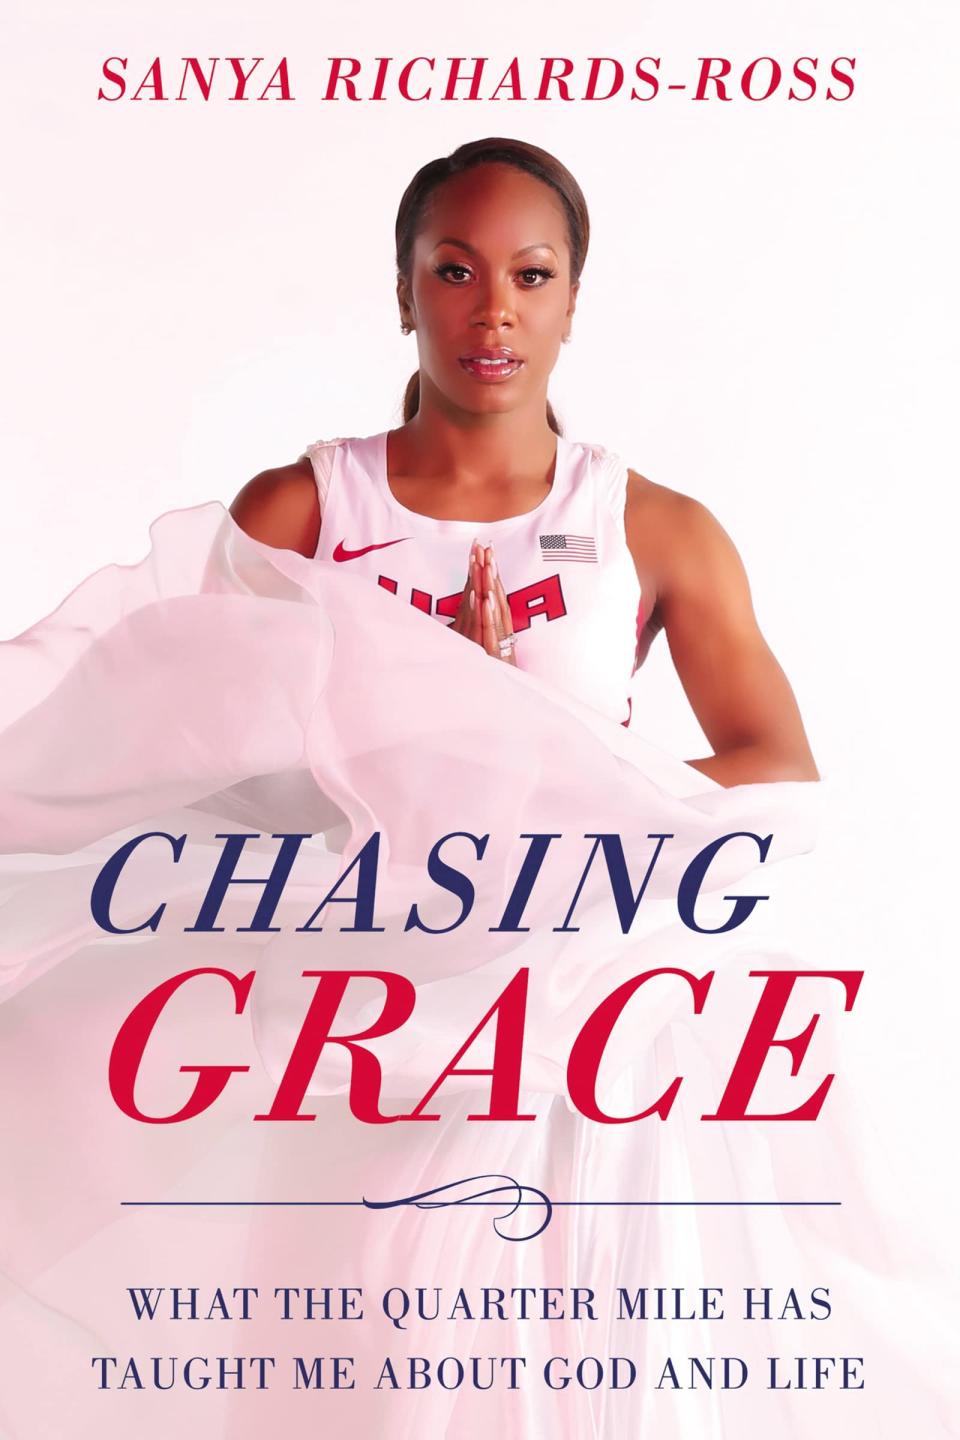 "Chasing Grace" by Sanya Richards-Ross